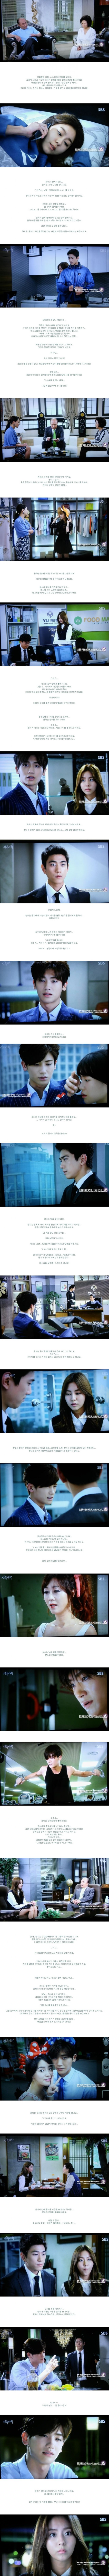 episode 6 captures for the Korean drama 'High Society'